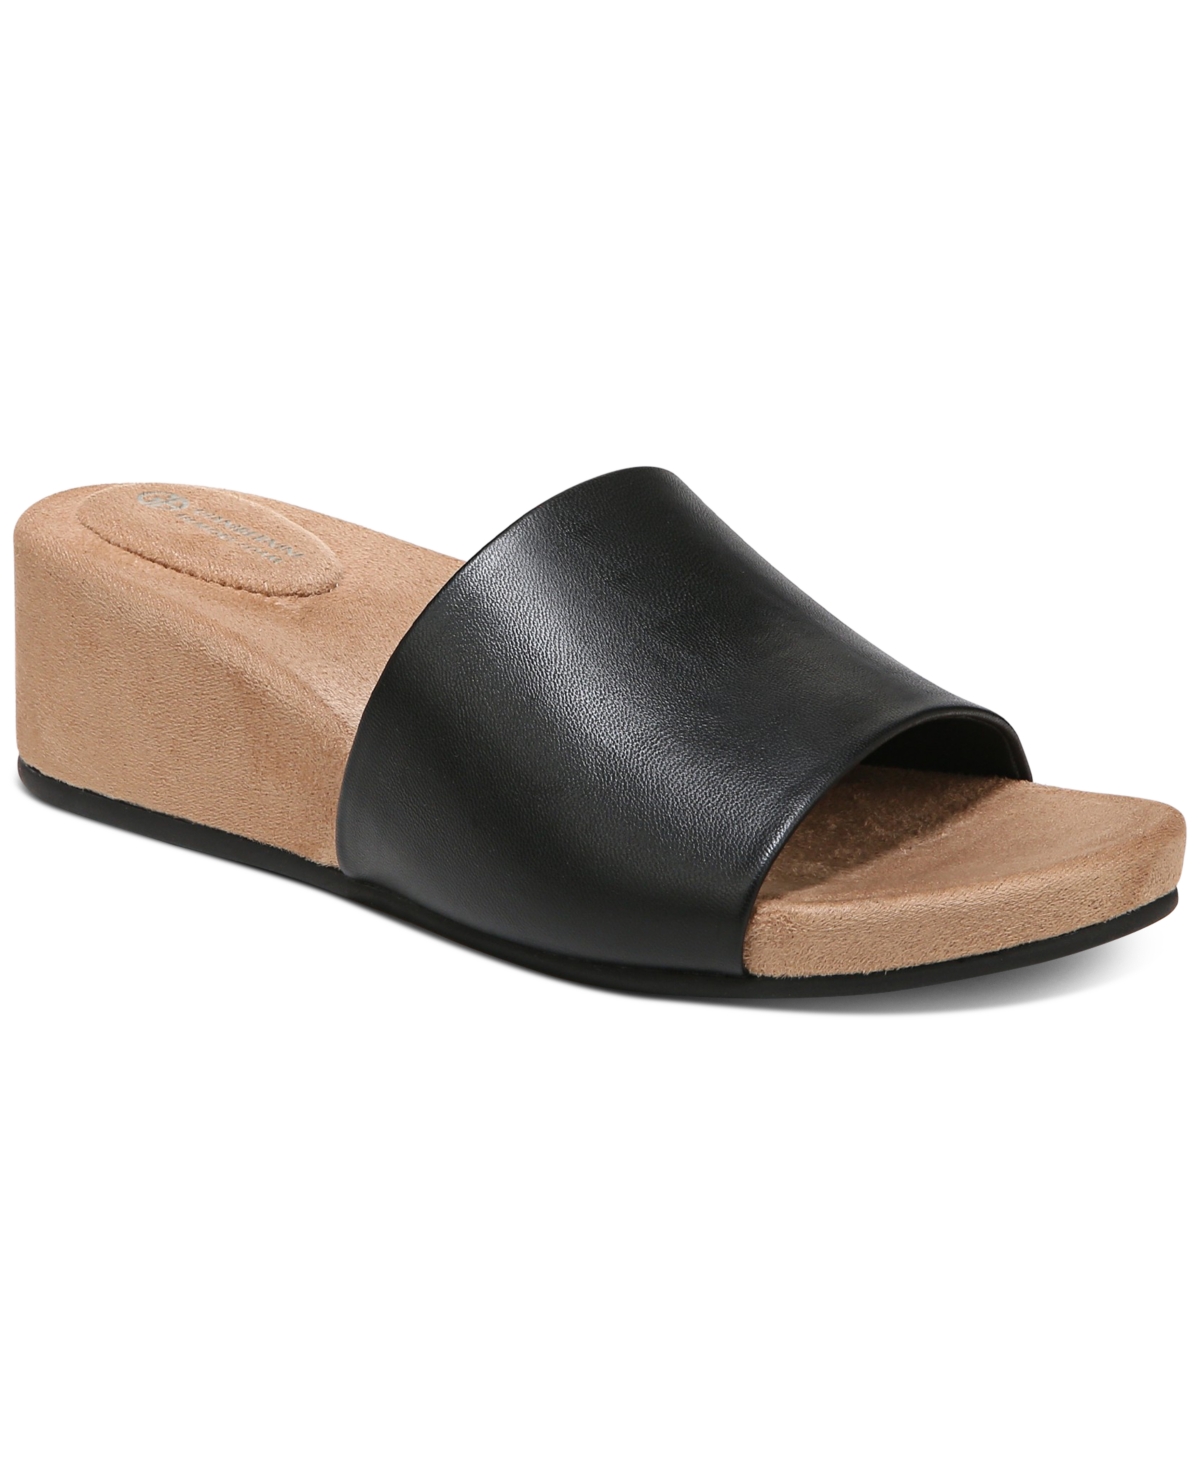 Giani Bernini Celinaa Slingback Platform Sandals, Created for Macy's ...